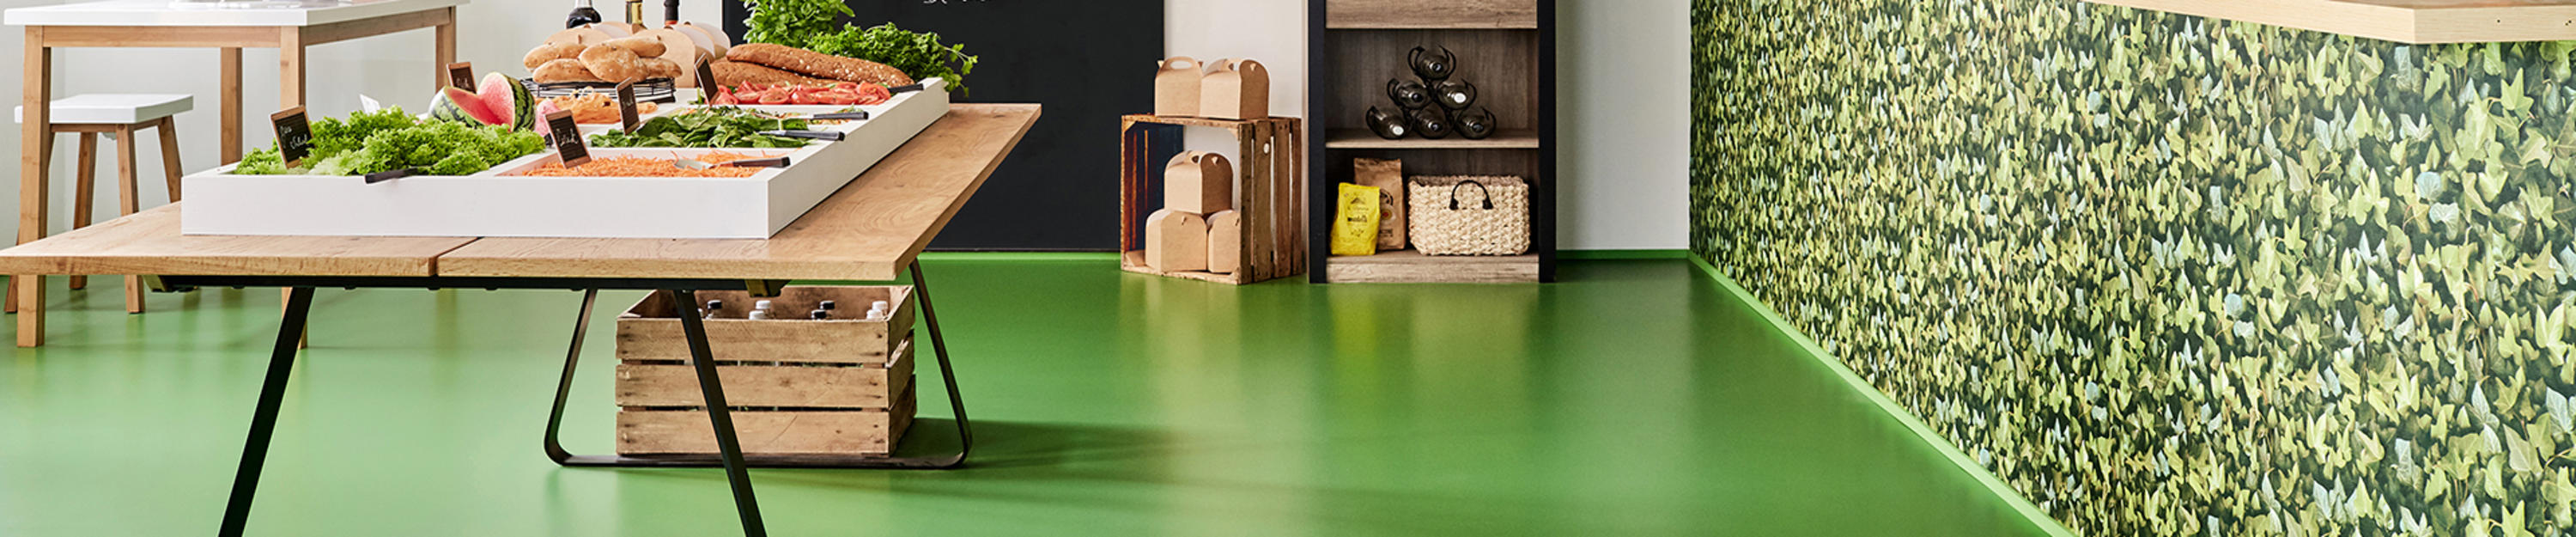 Linoleum Floors Sustainable Durable, How To Improve Linoleum Floor